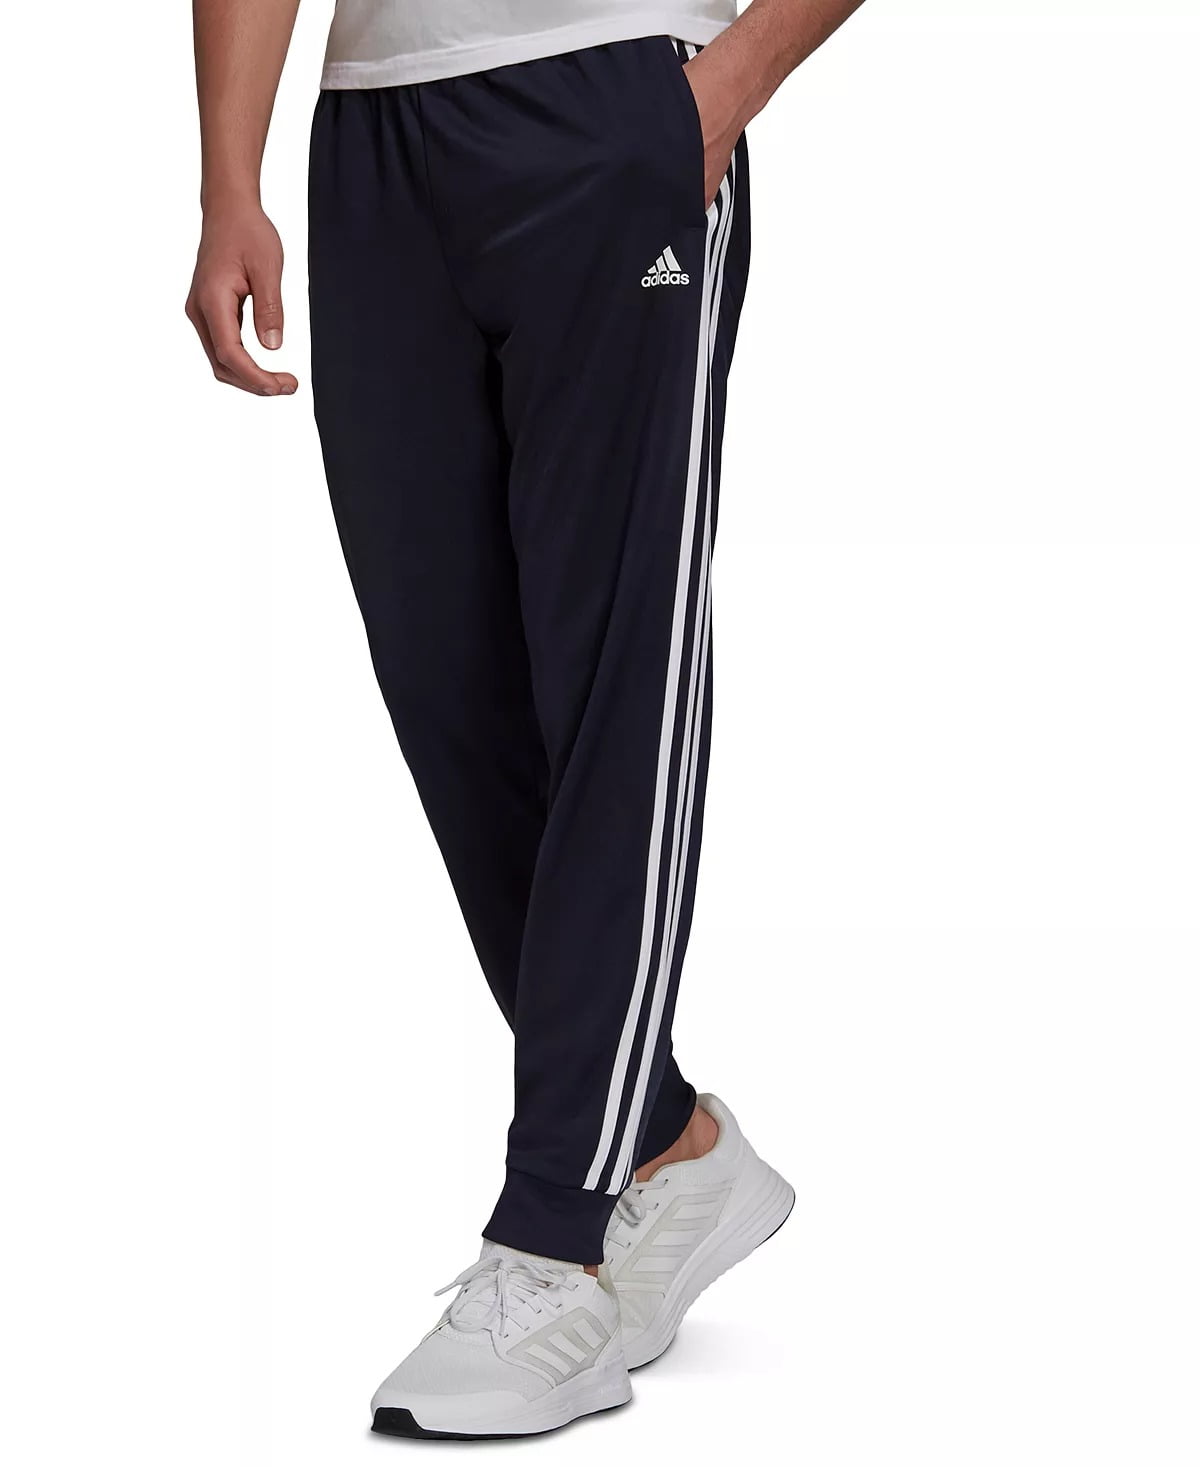 Adidas LEGEND Pants, Men\'s INK/WHITE Large US Tricot Jogger